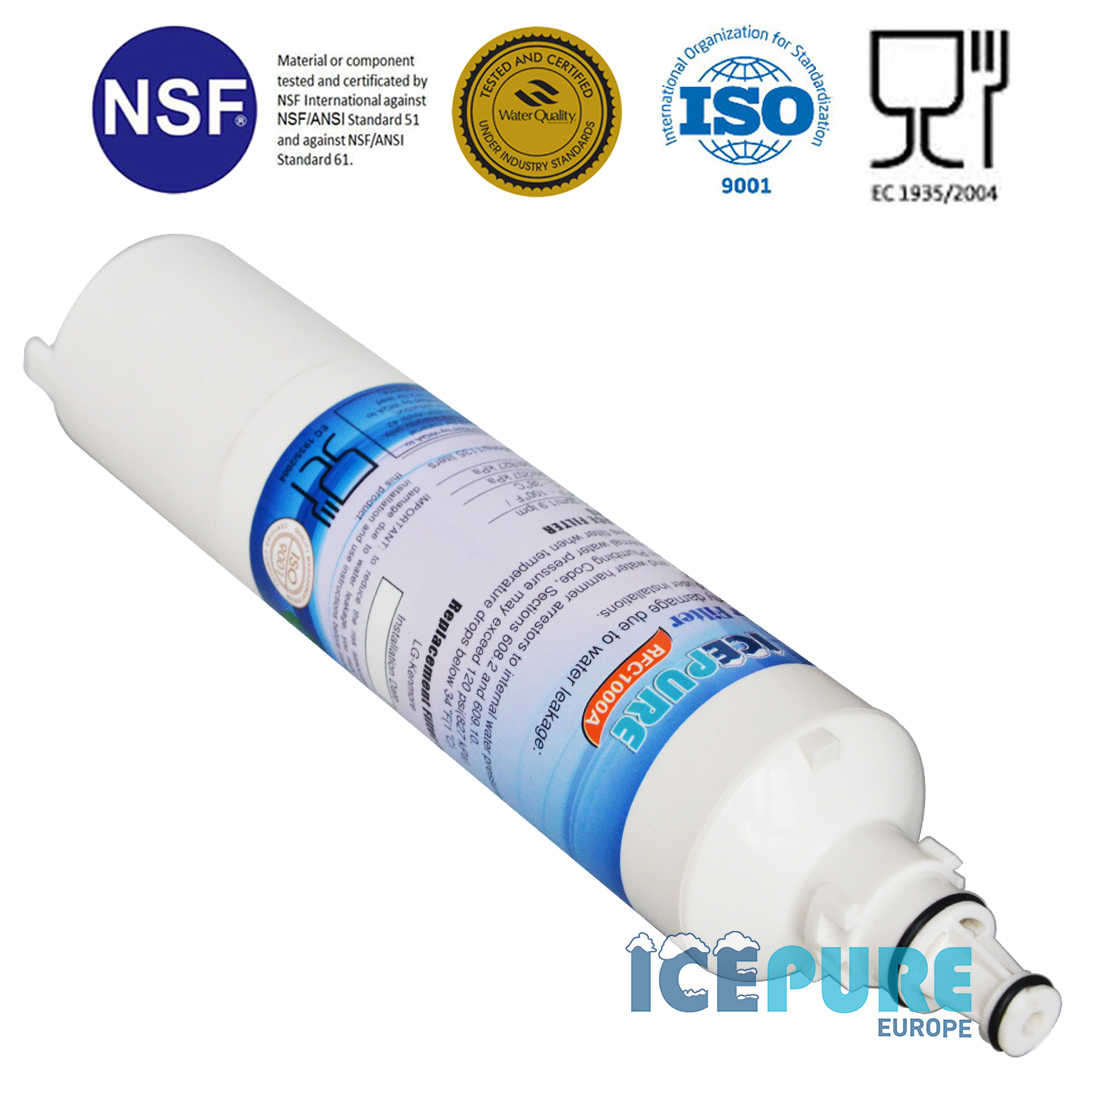 Filtre frigo americain ICEPURE RFC1000A remplace LG